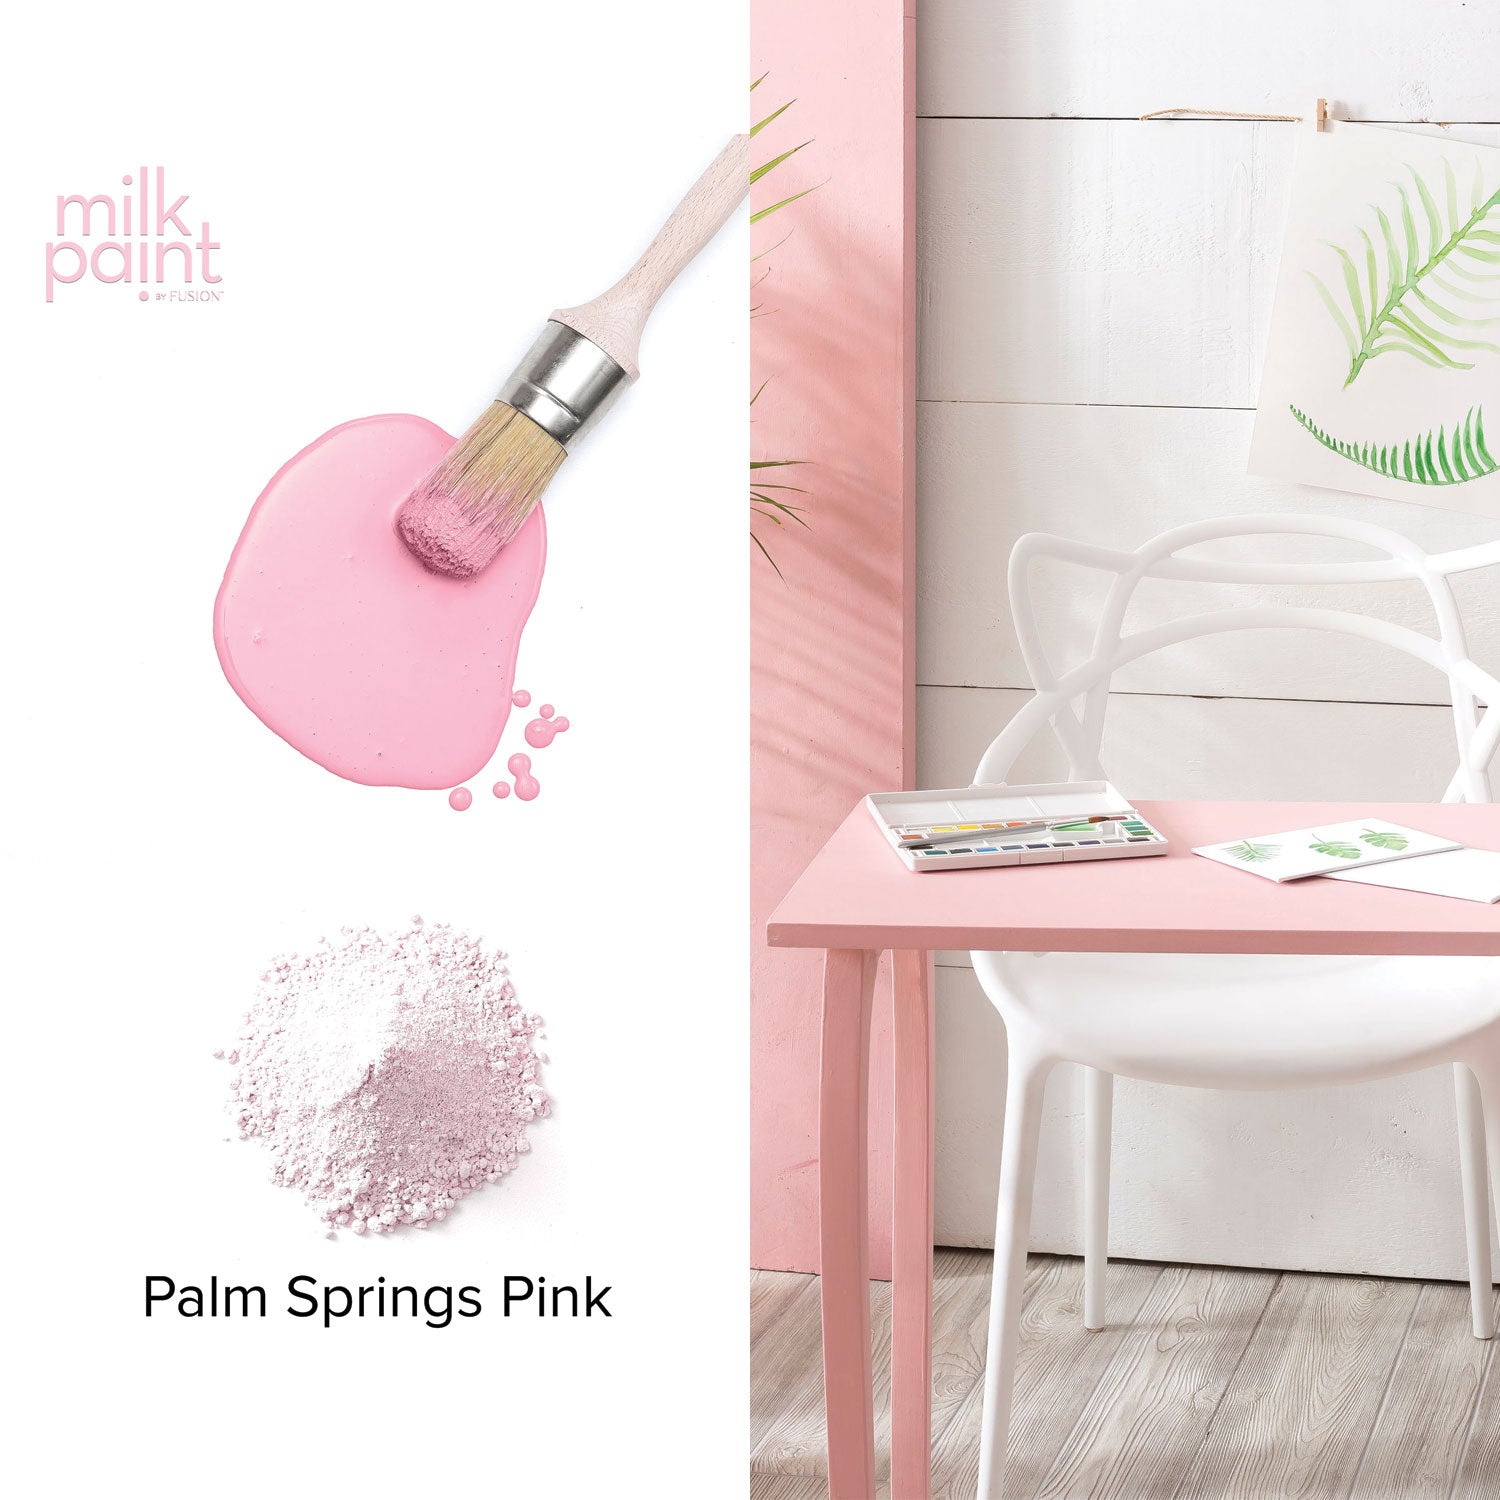 Palm Springs Pink